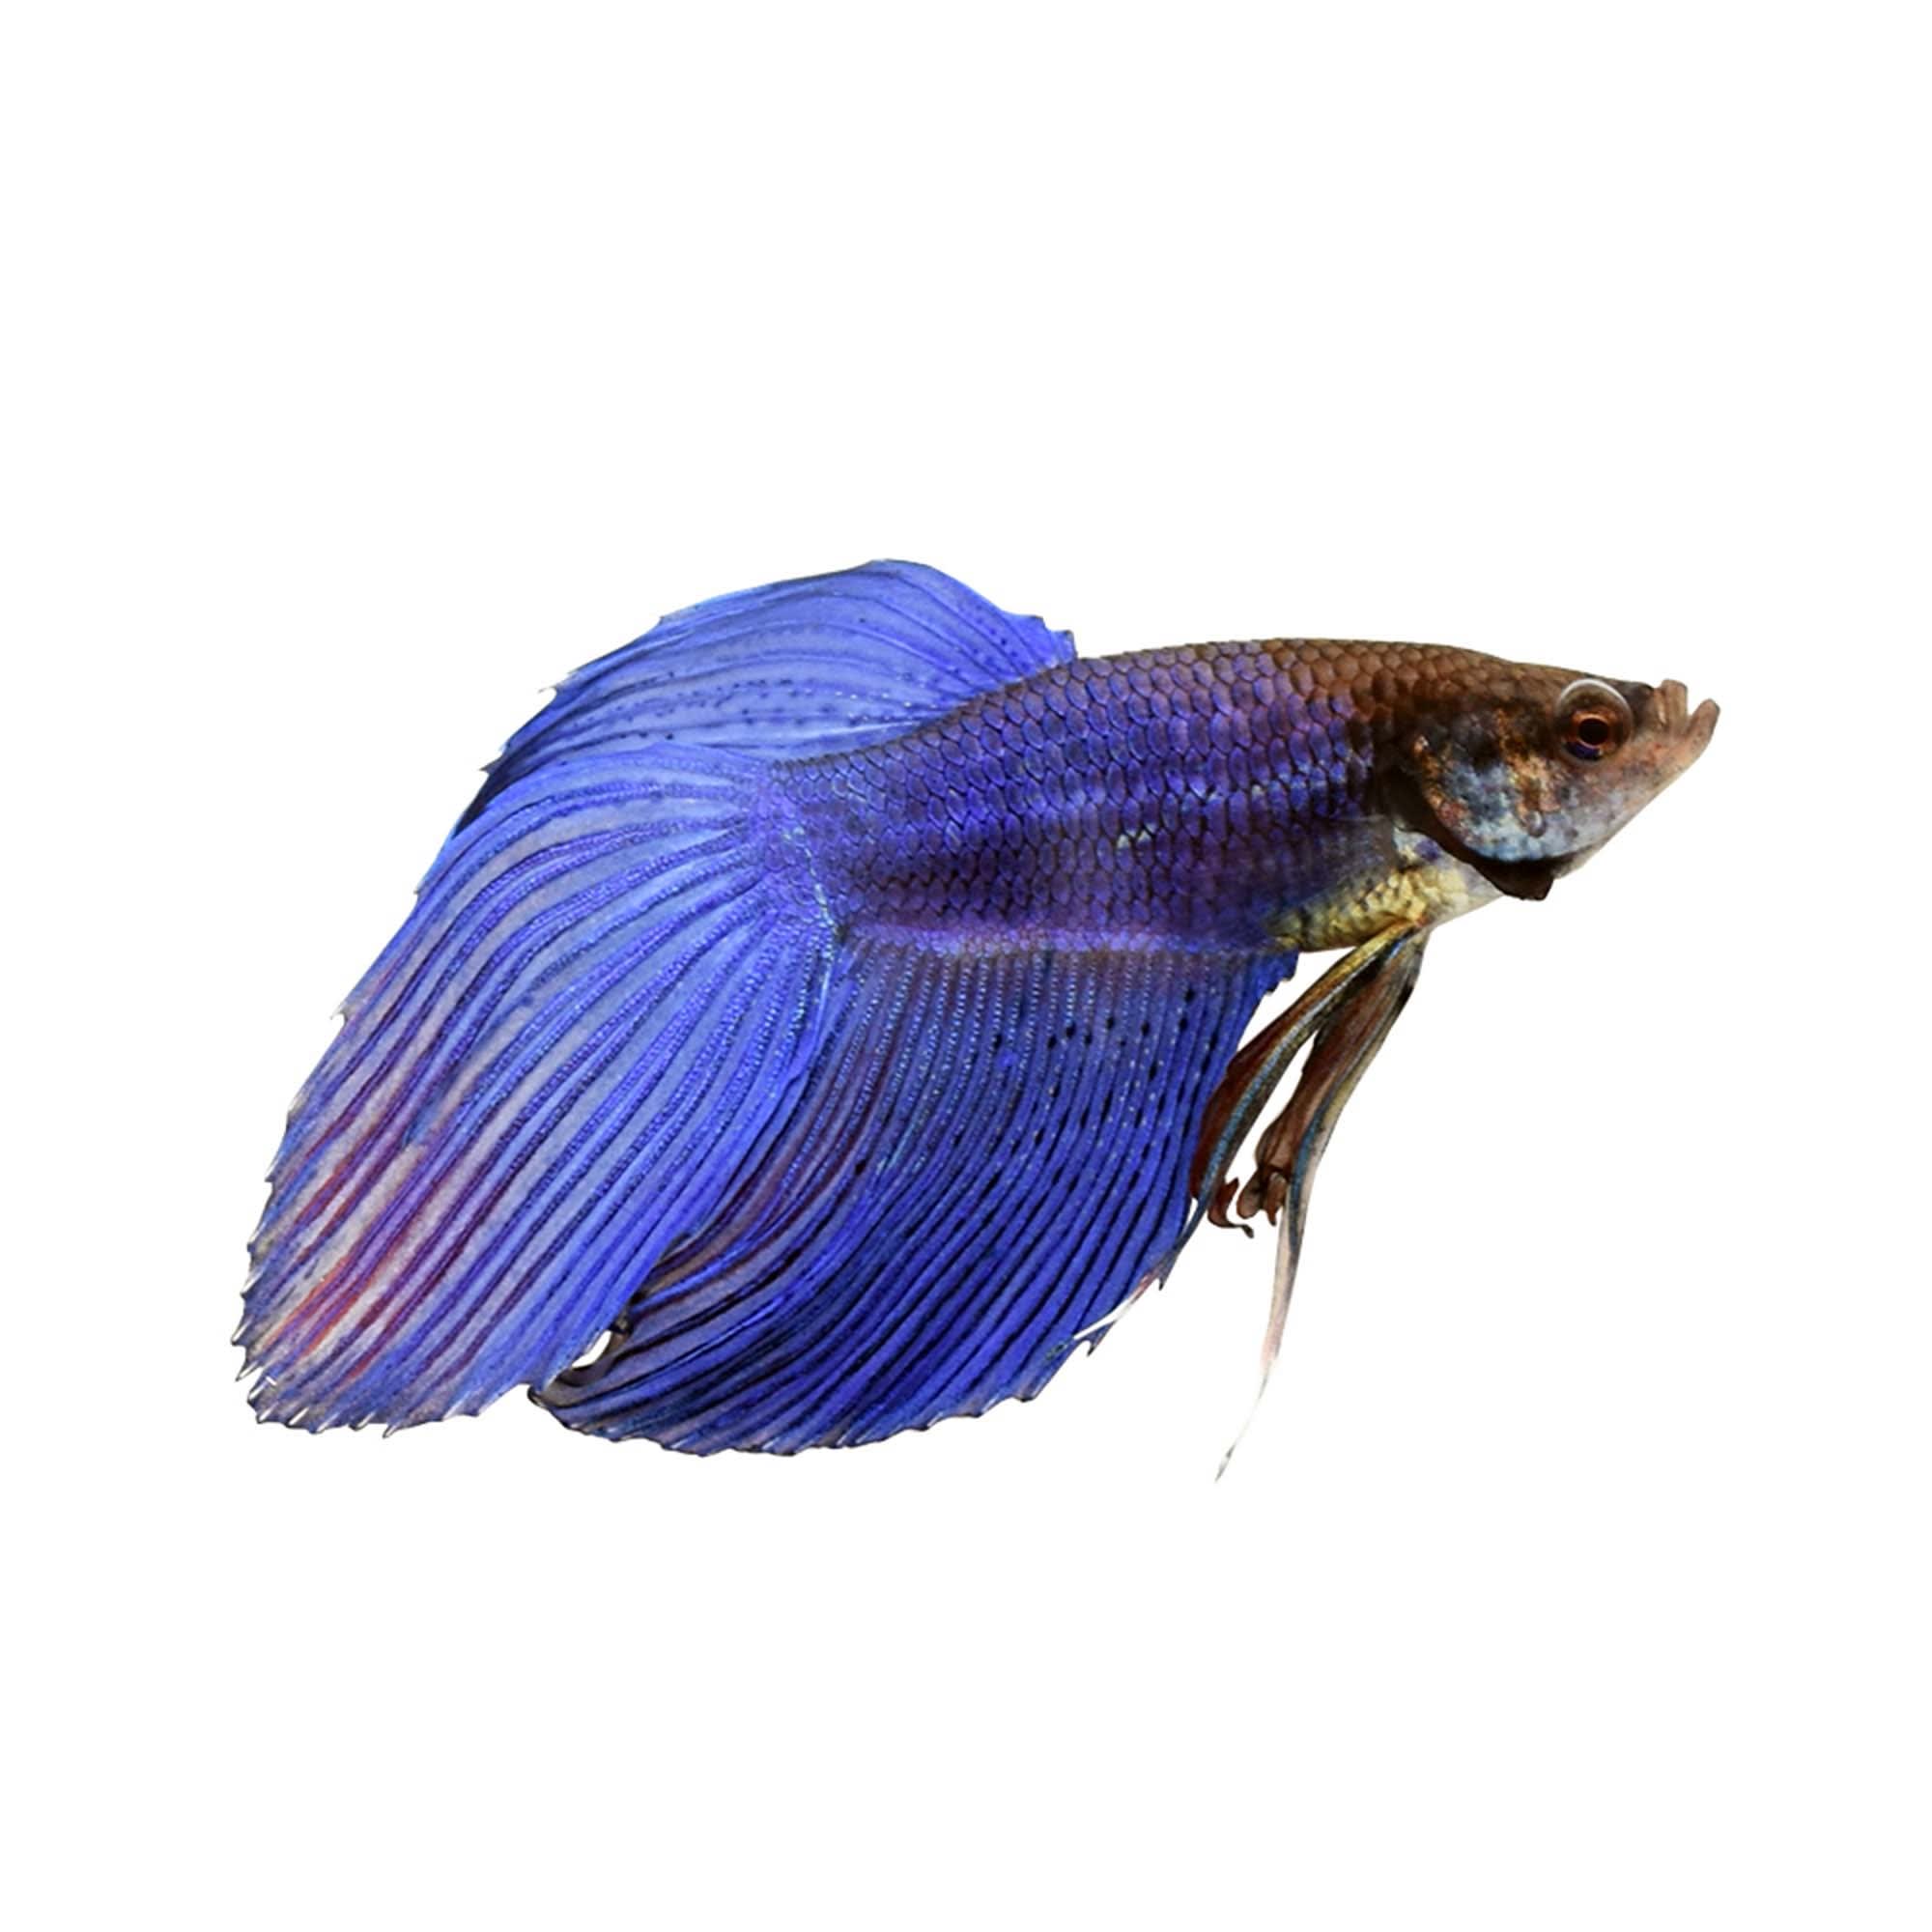 The Stunning Blue Male Betta Fish 2